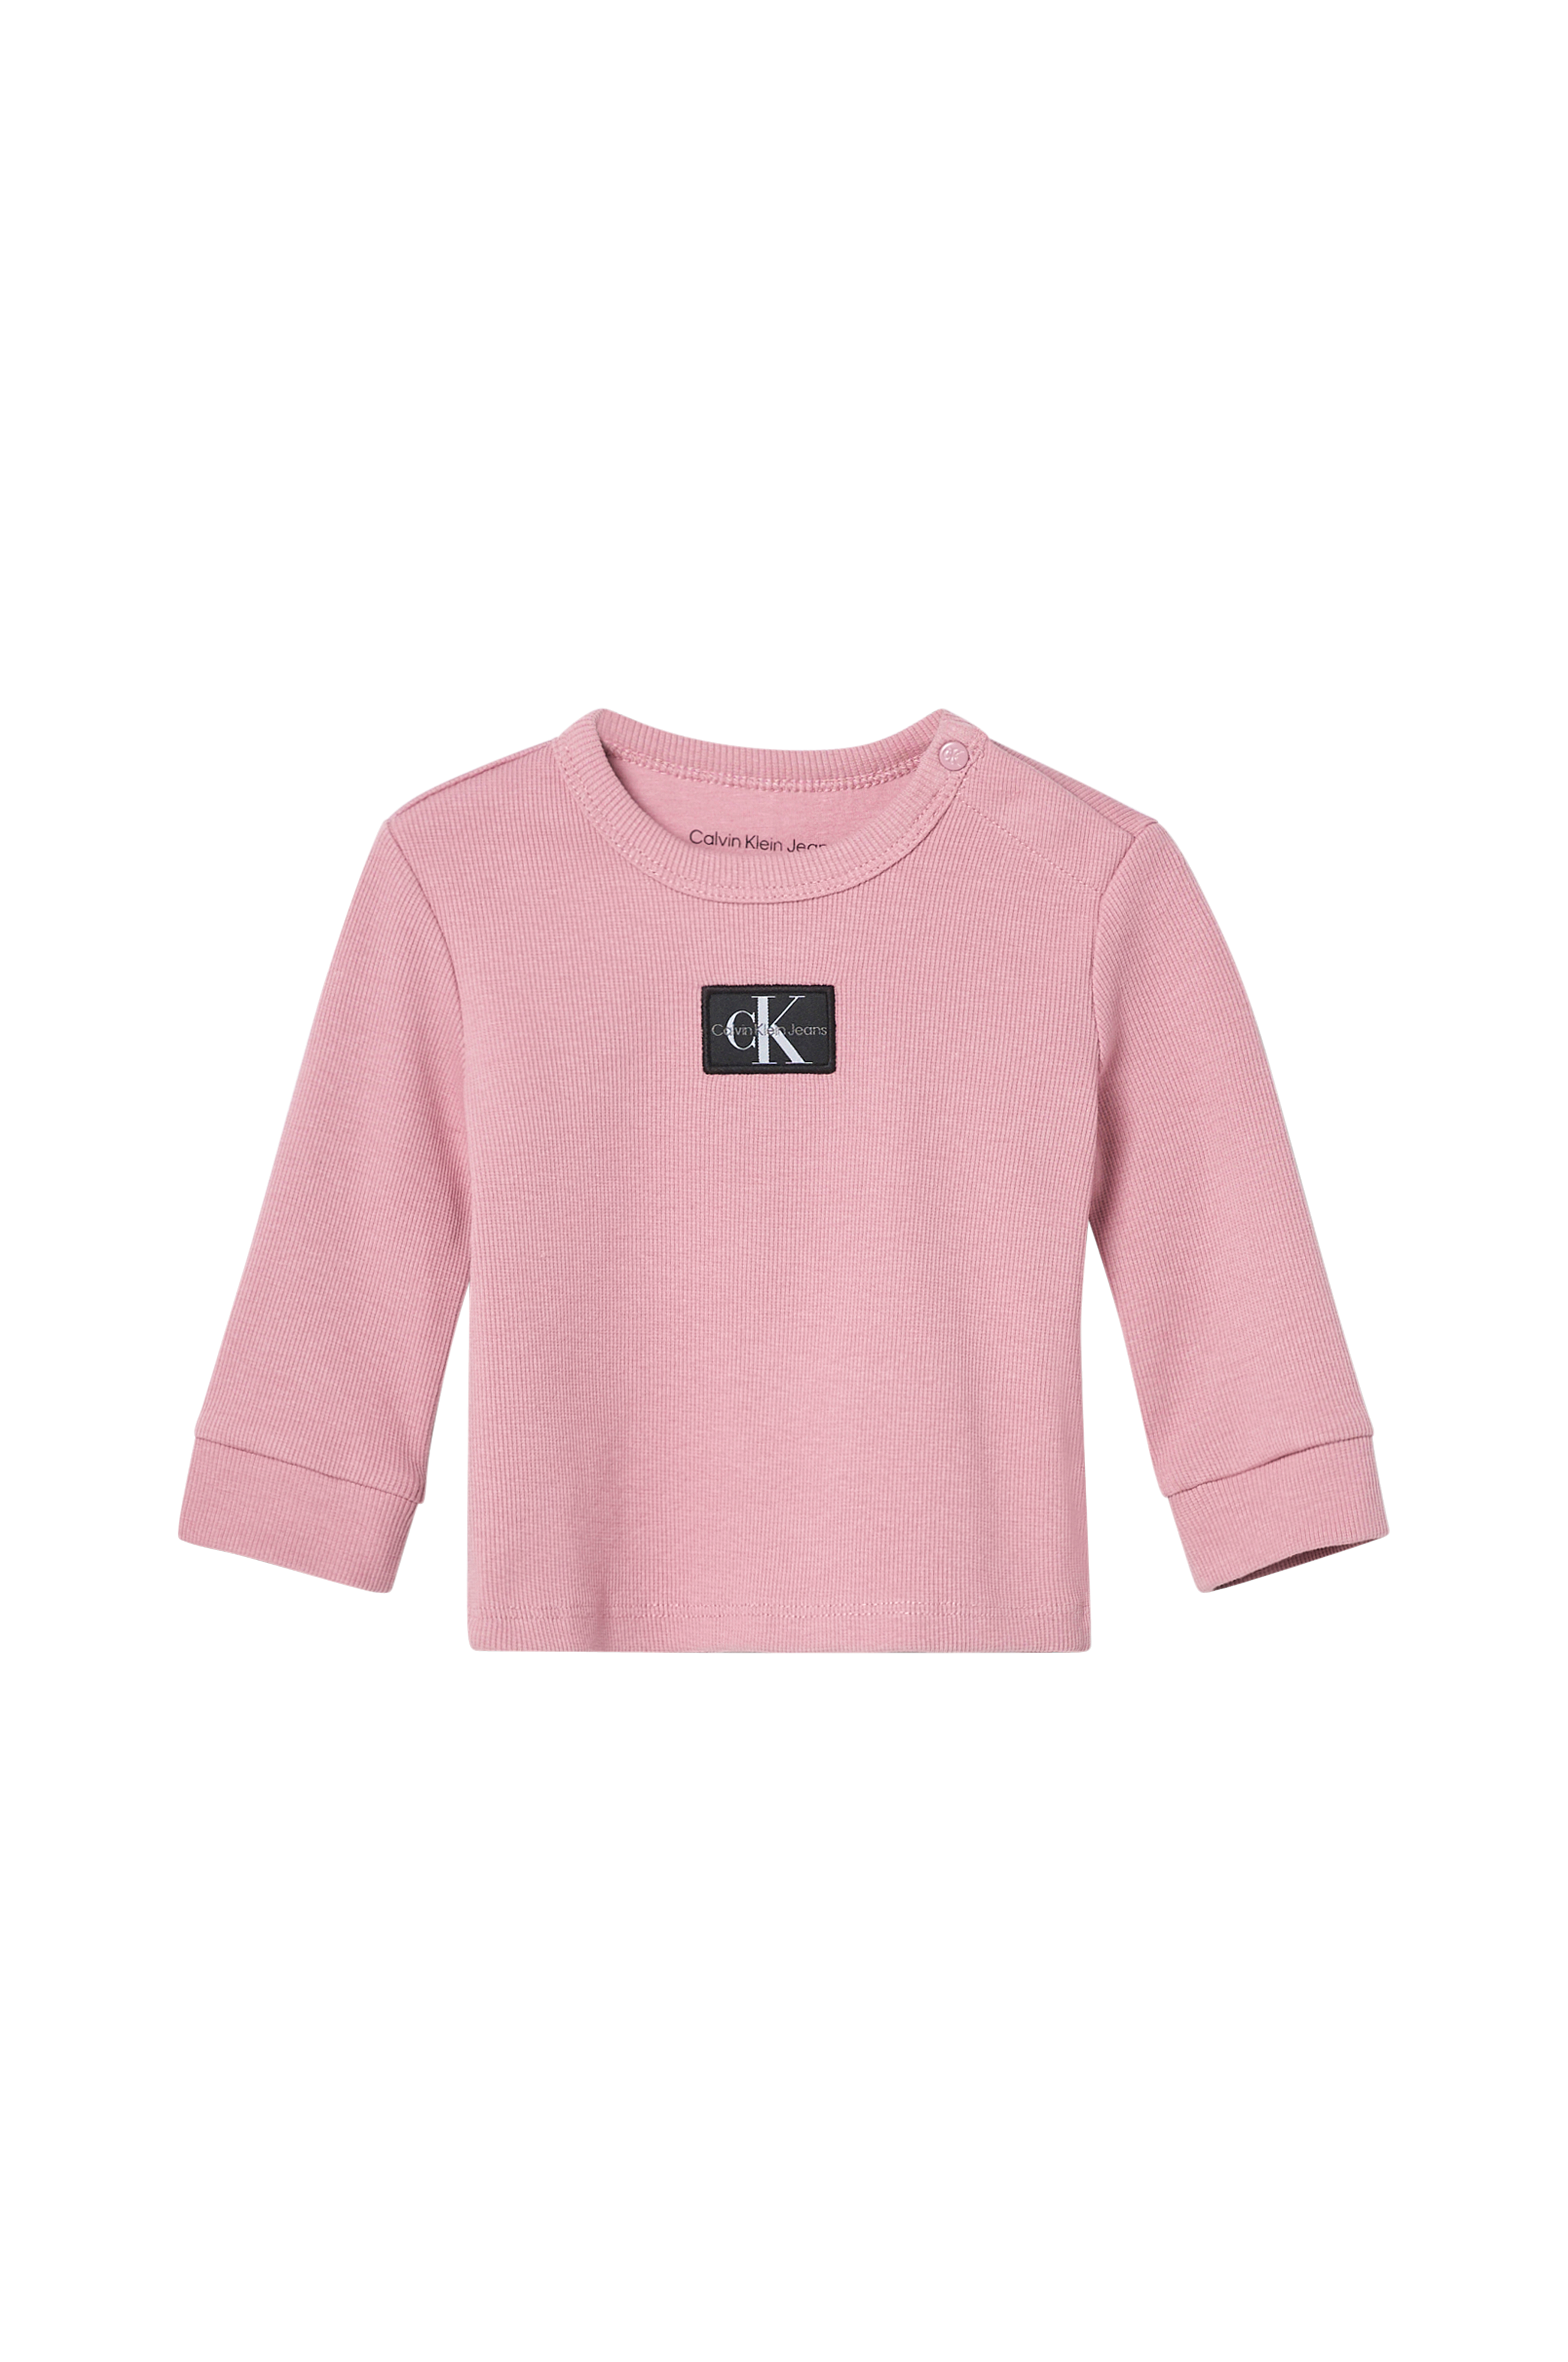 lejlighed Langt væk R Calvin Klein Top Monogram Rib LS T-shirt - Lilla - Babytoppe & T-shirts |  Ellos.dk